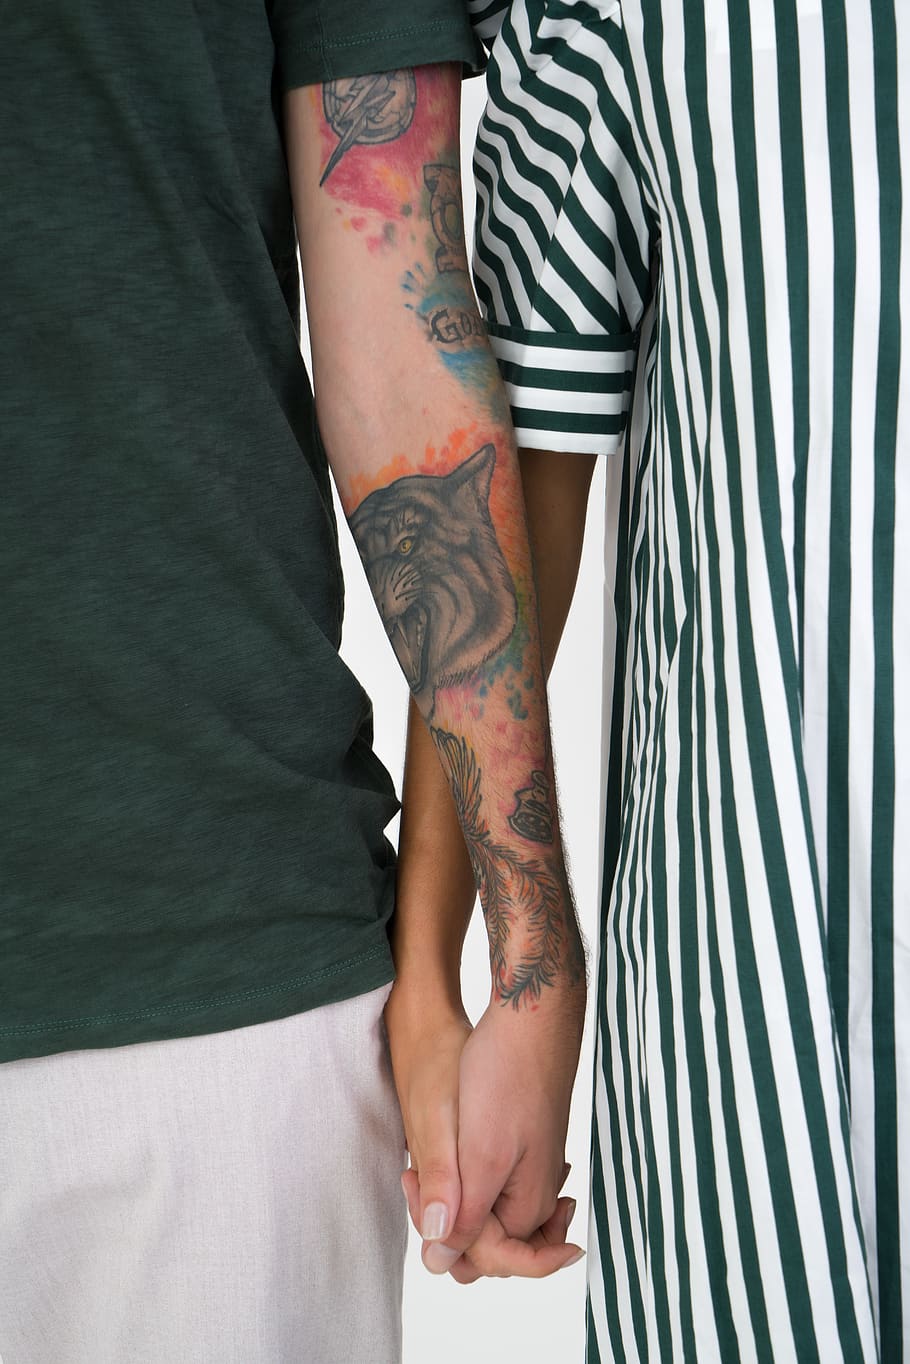 Boyfriend Girlfriend Tattoo Designs & Ideas for Men and Women